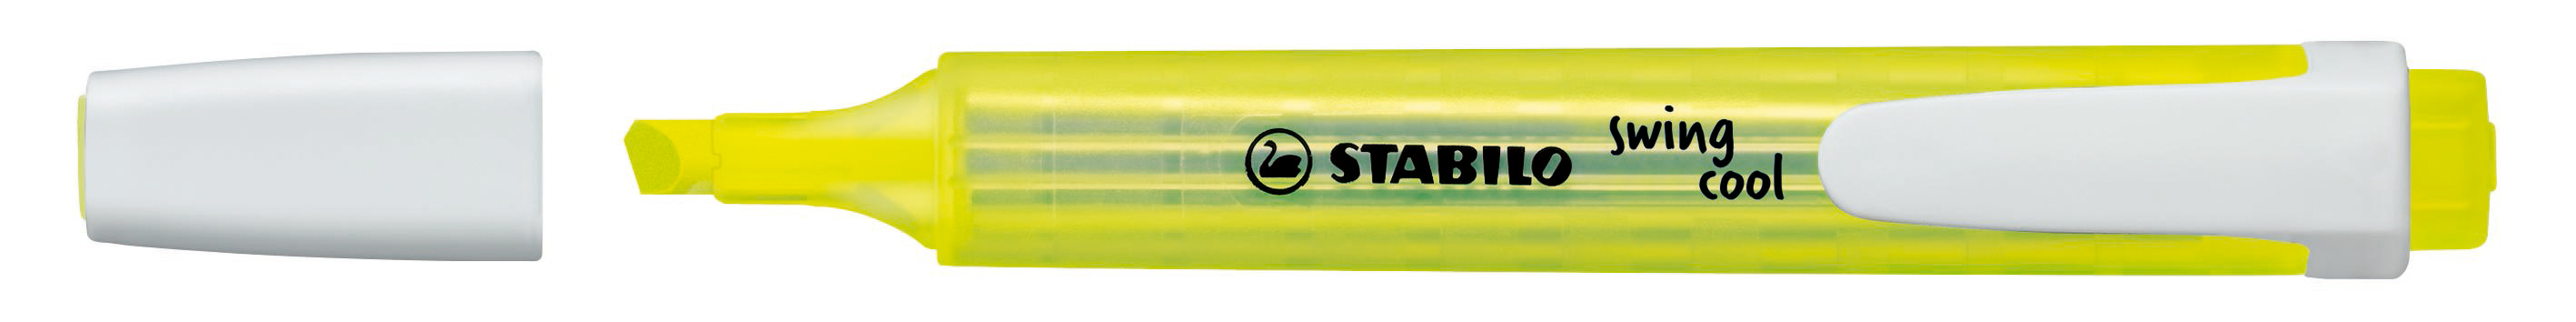 STABILO Textmarker Swing Cool gelb<br>